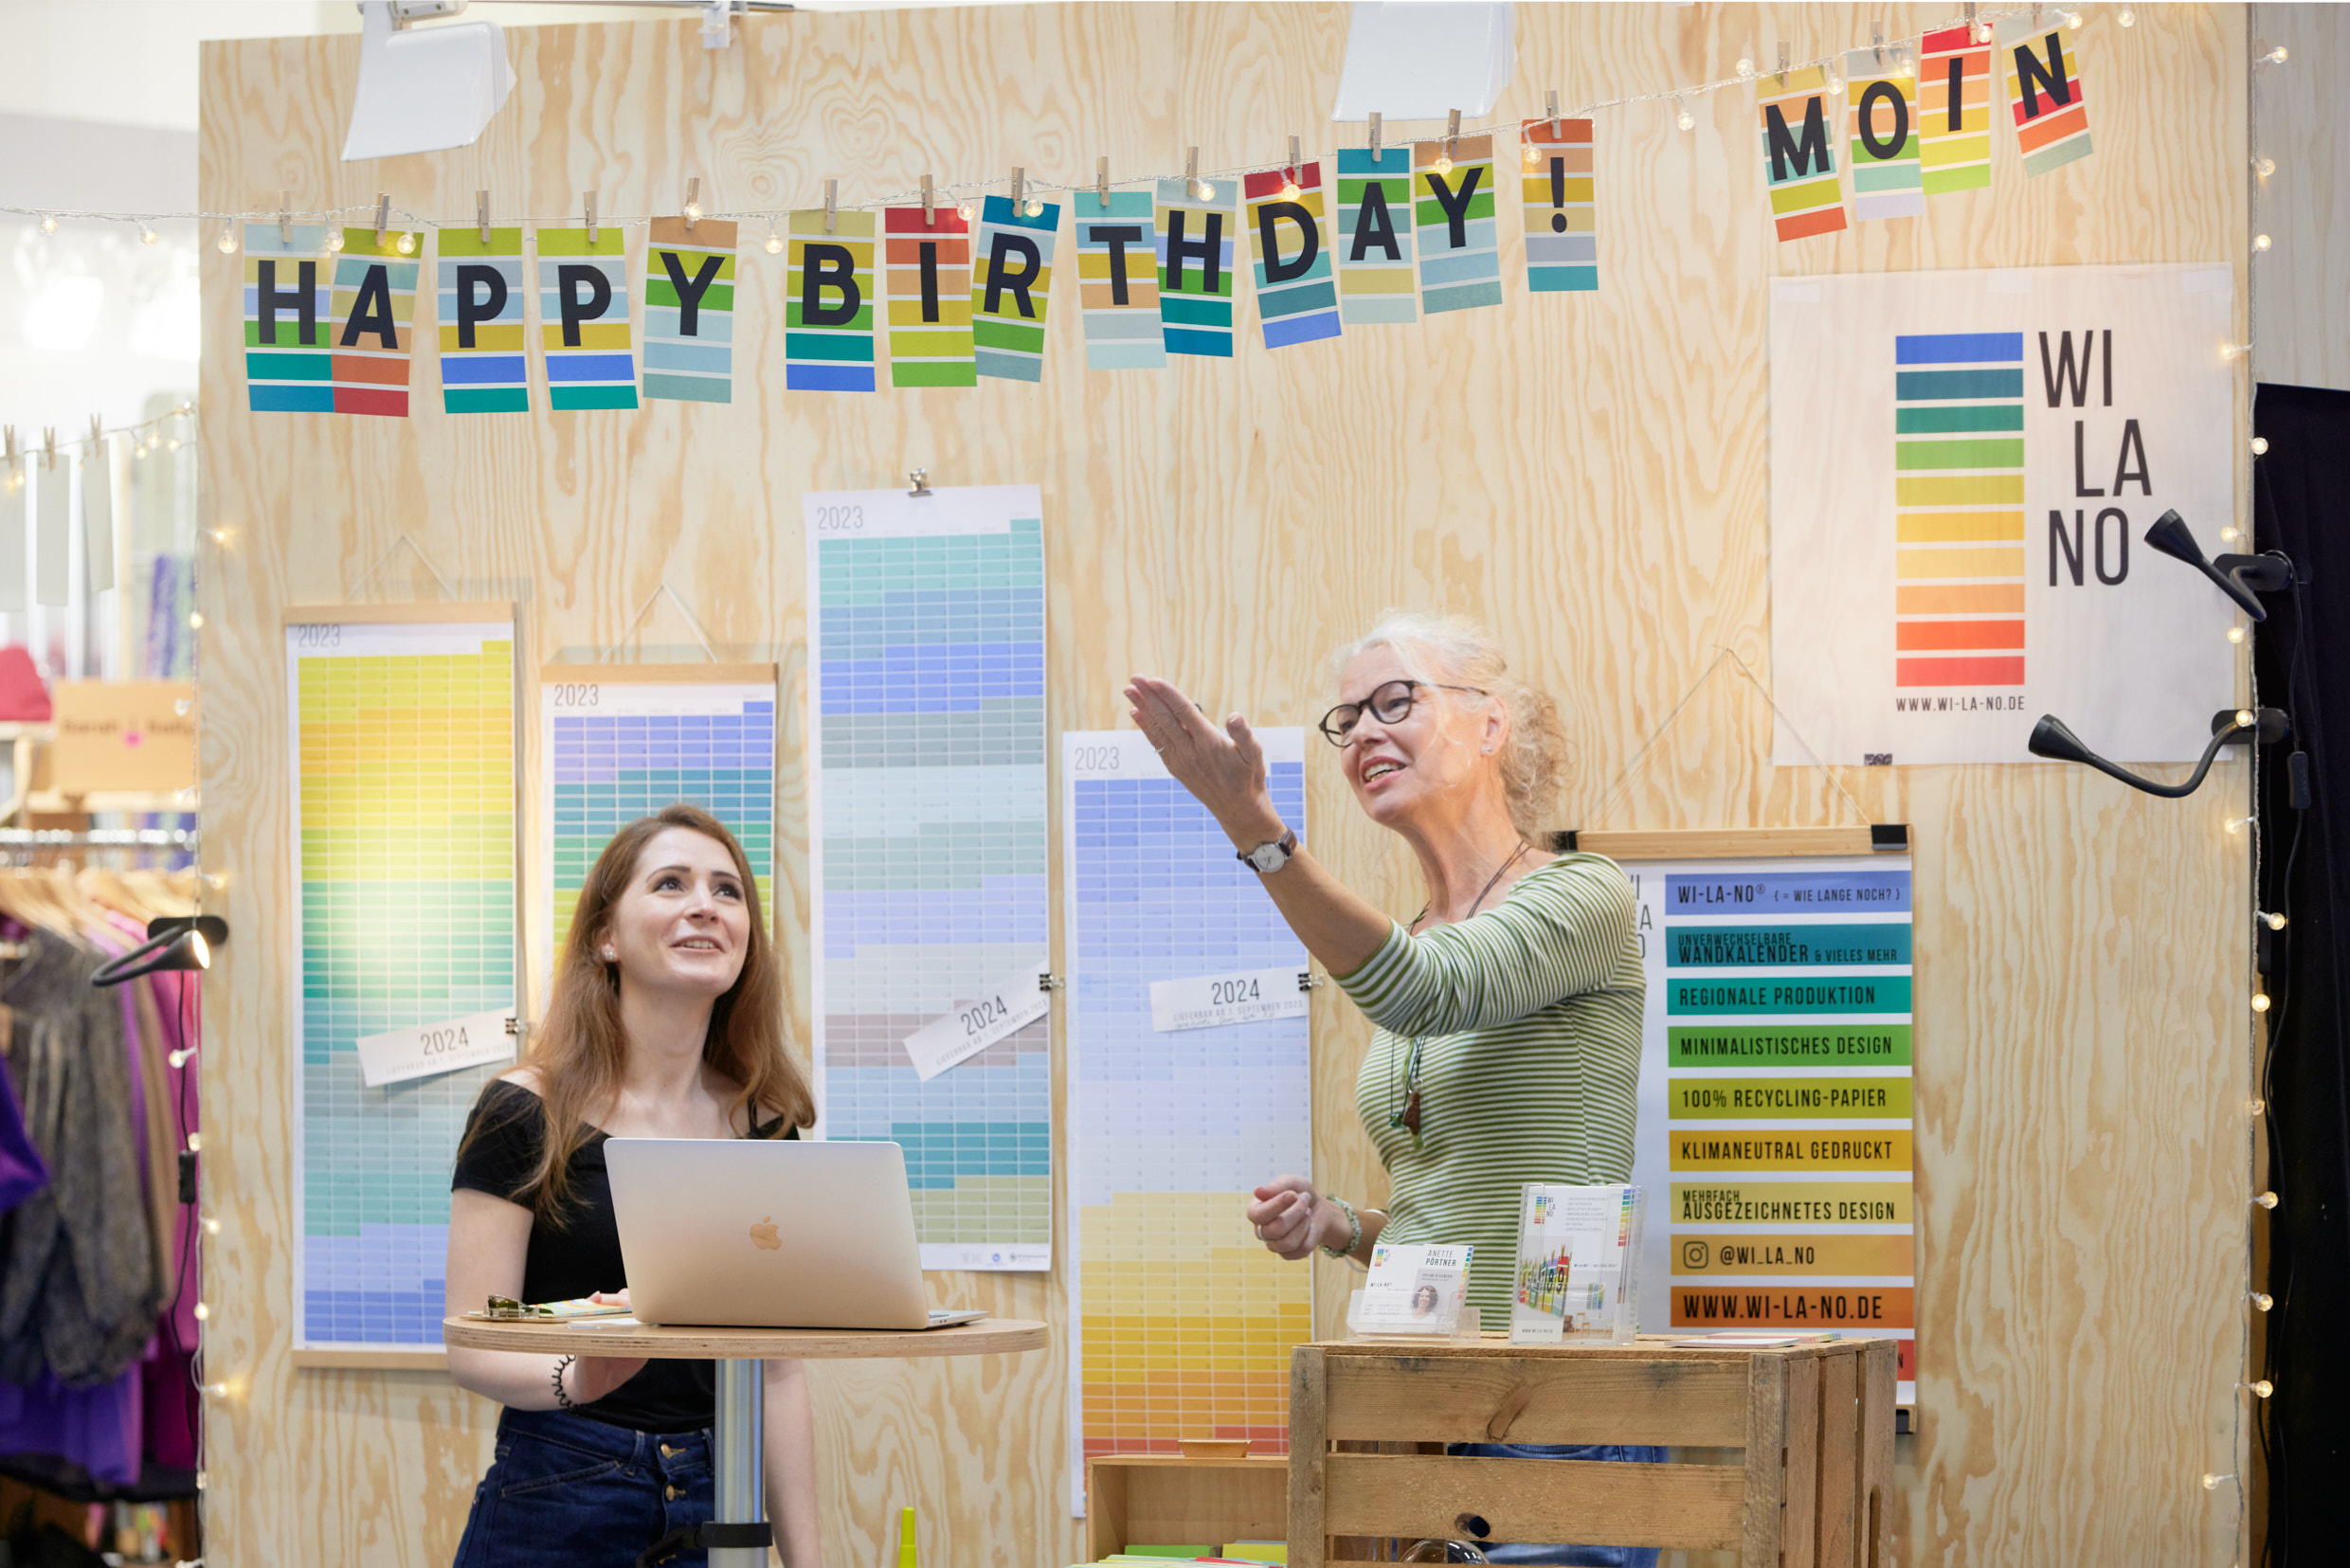 Happy Birthday, Nordstil: The regional trade fair celebrates its tenth anniversary in 2024